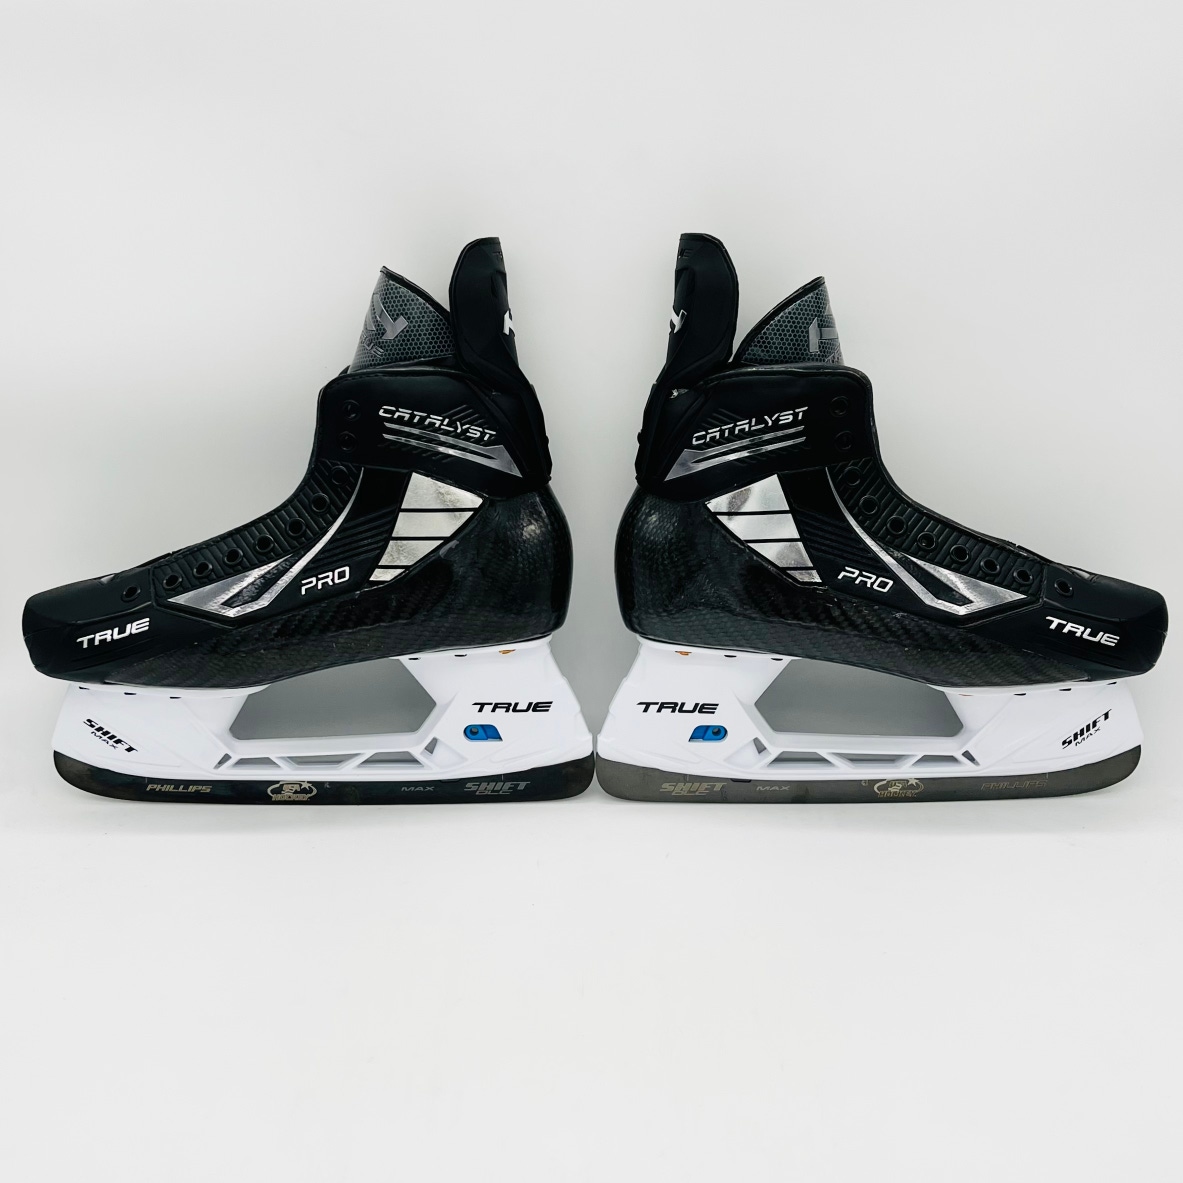 New True Pro Custom CATALYST Pro Hockey Skates-11 D/A-288 Holders-Shift DLC MAX-TEAM USA Stamp